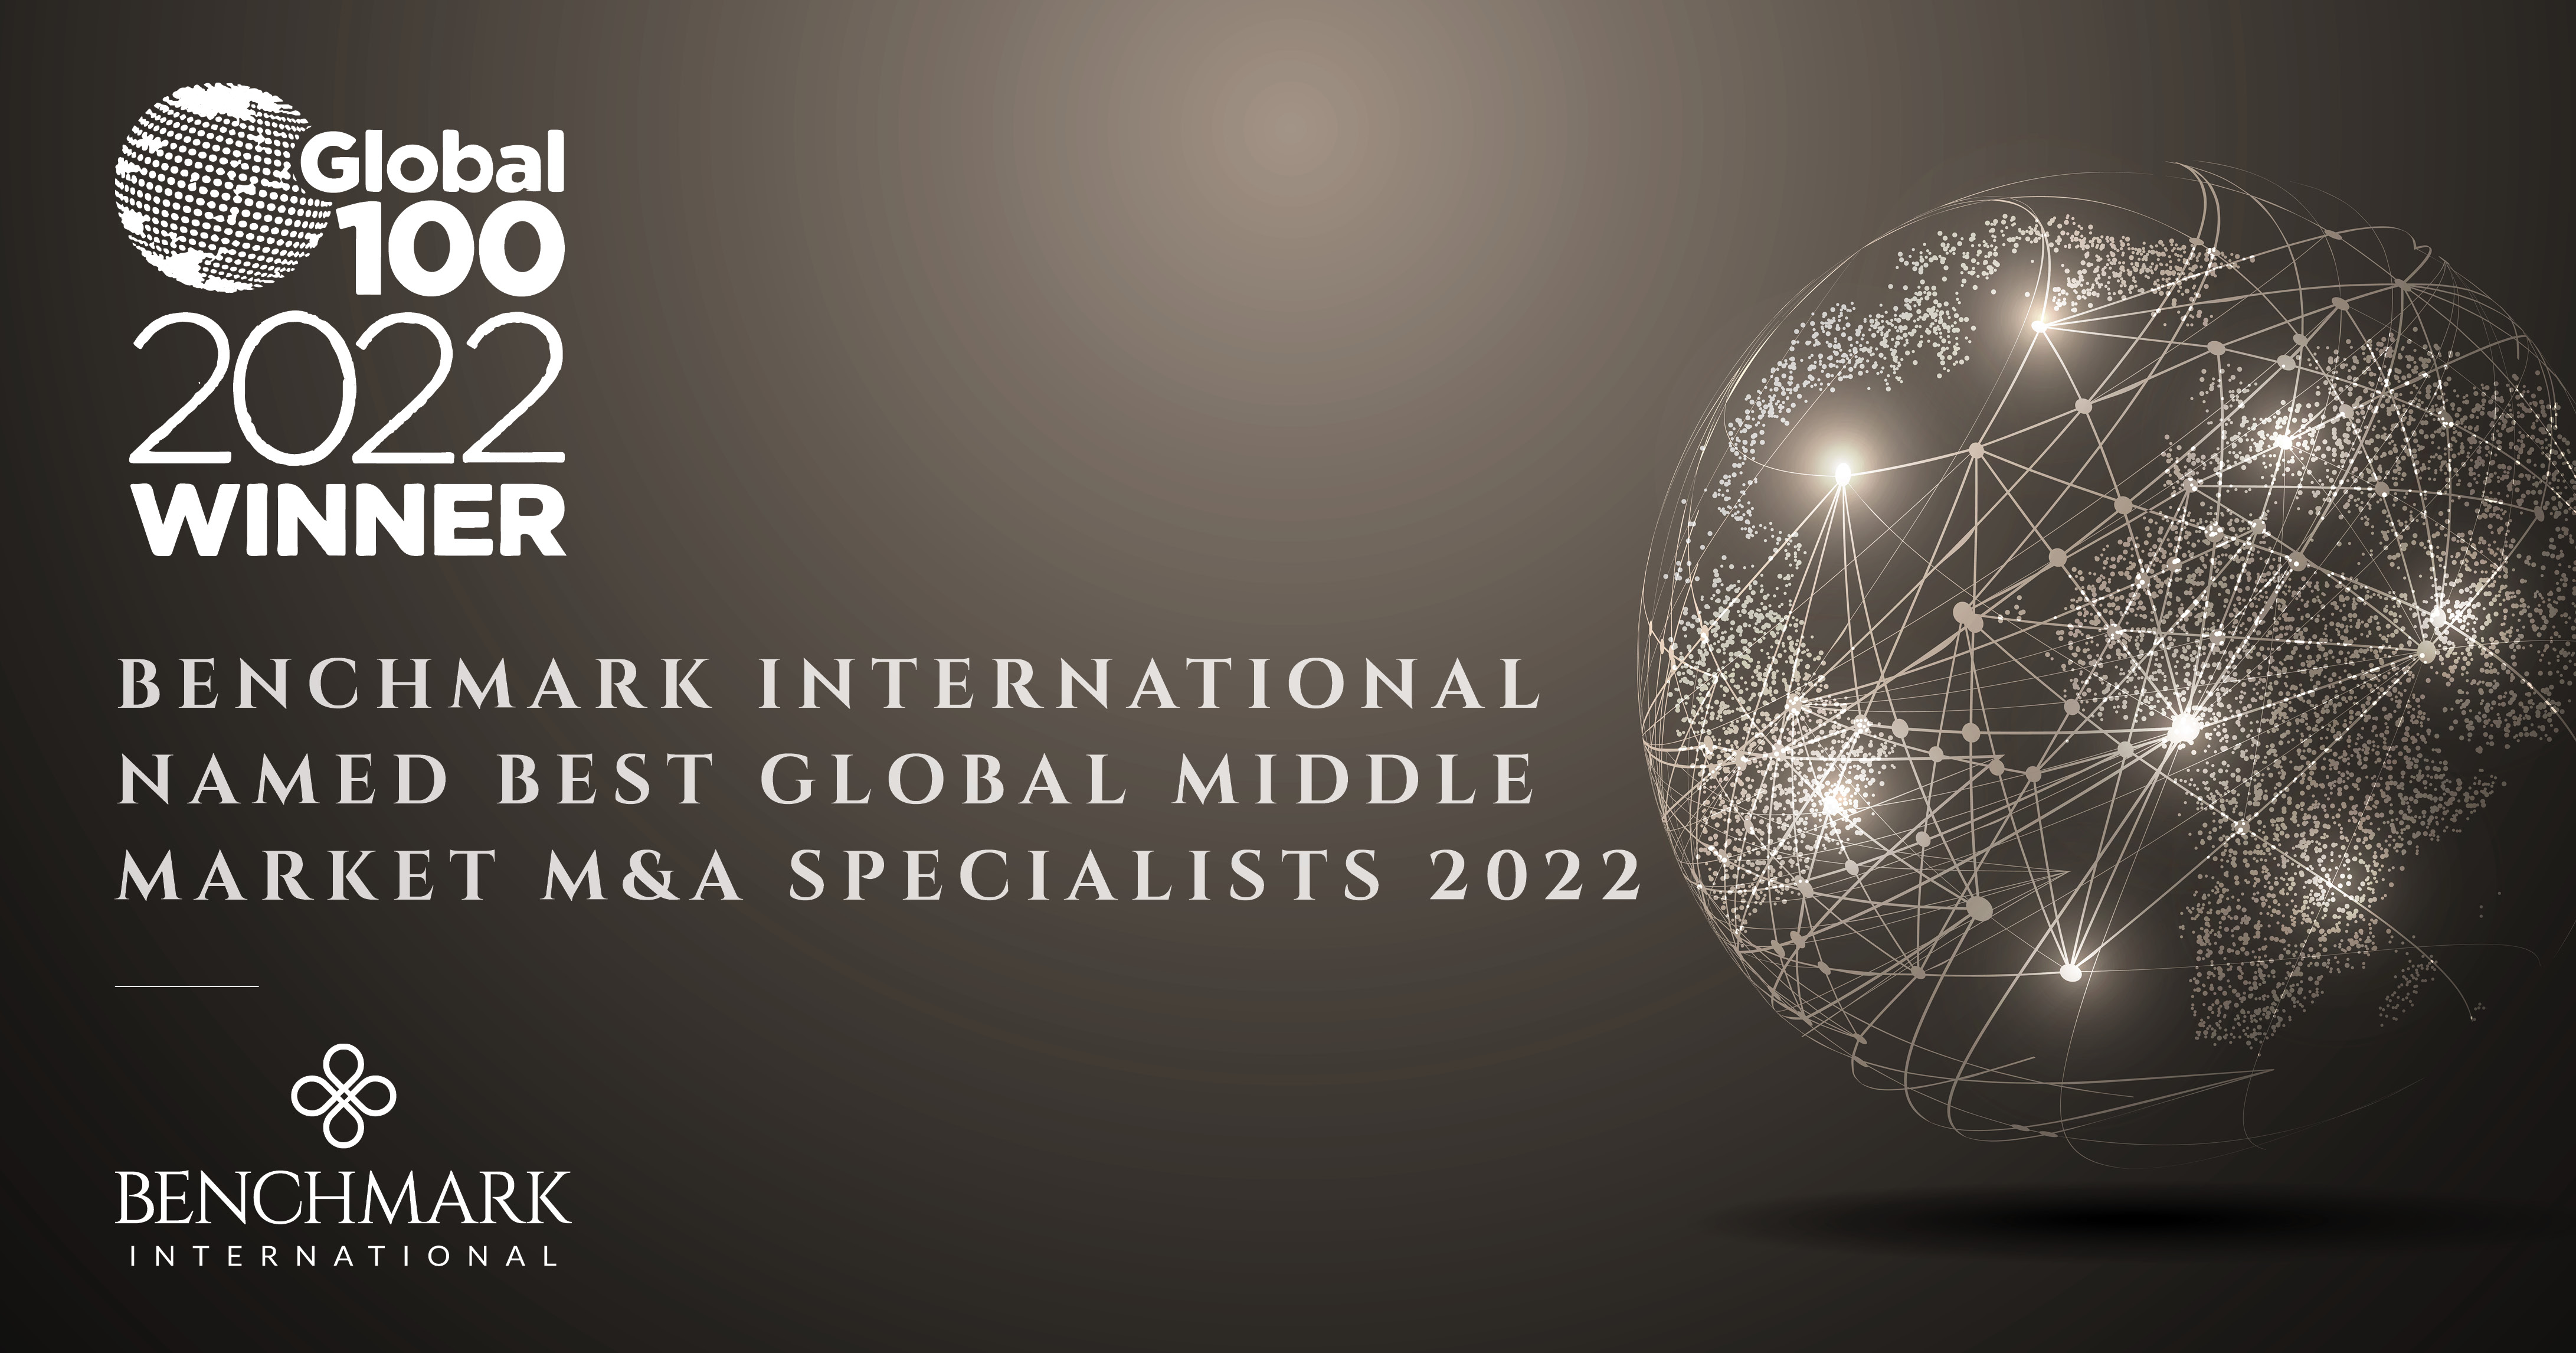 Benchmark International Named Best Global Middle Market M&A Specialists 2022